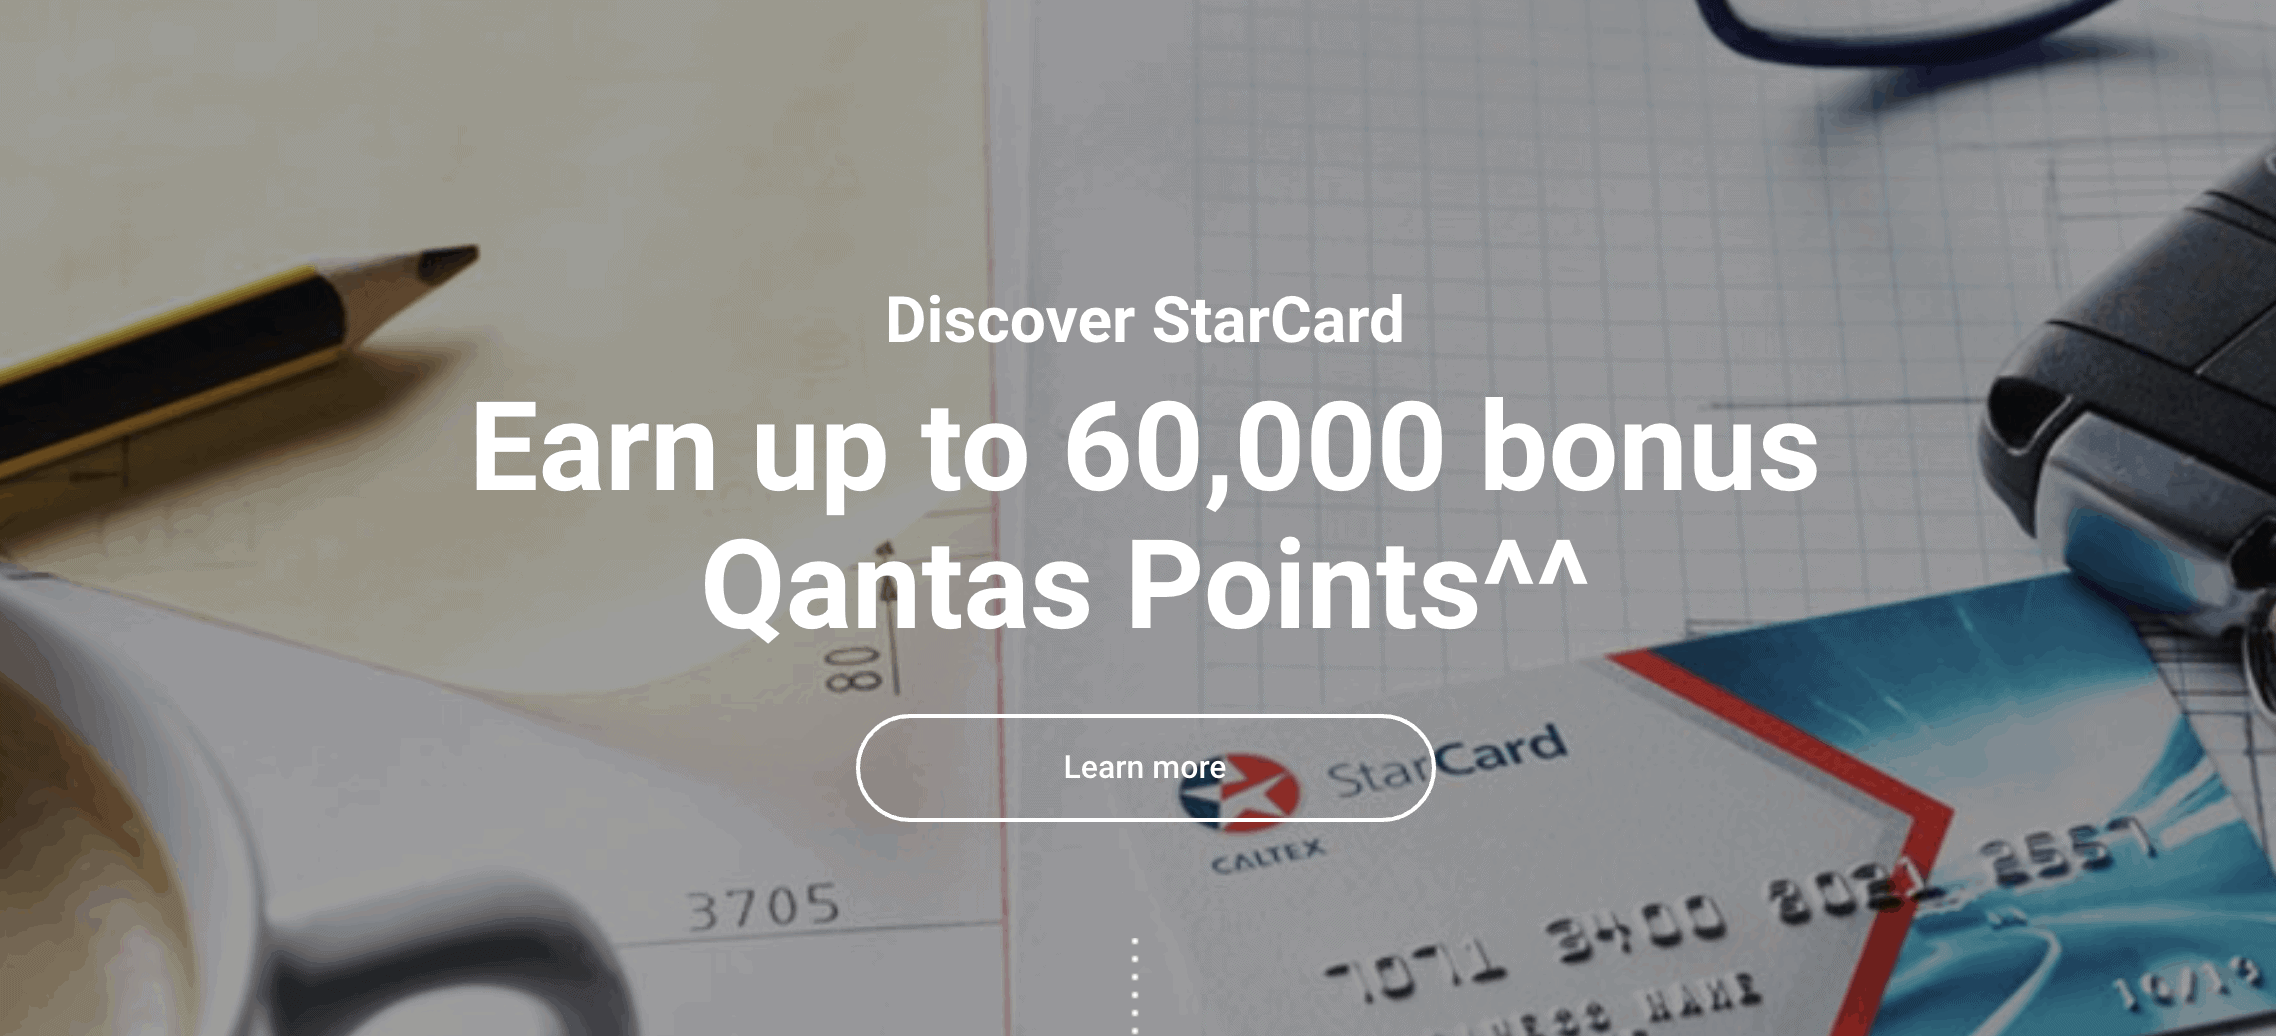 Qantas Points with Caltex StarCard